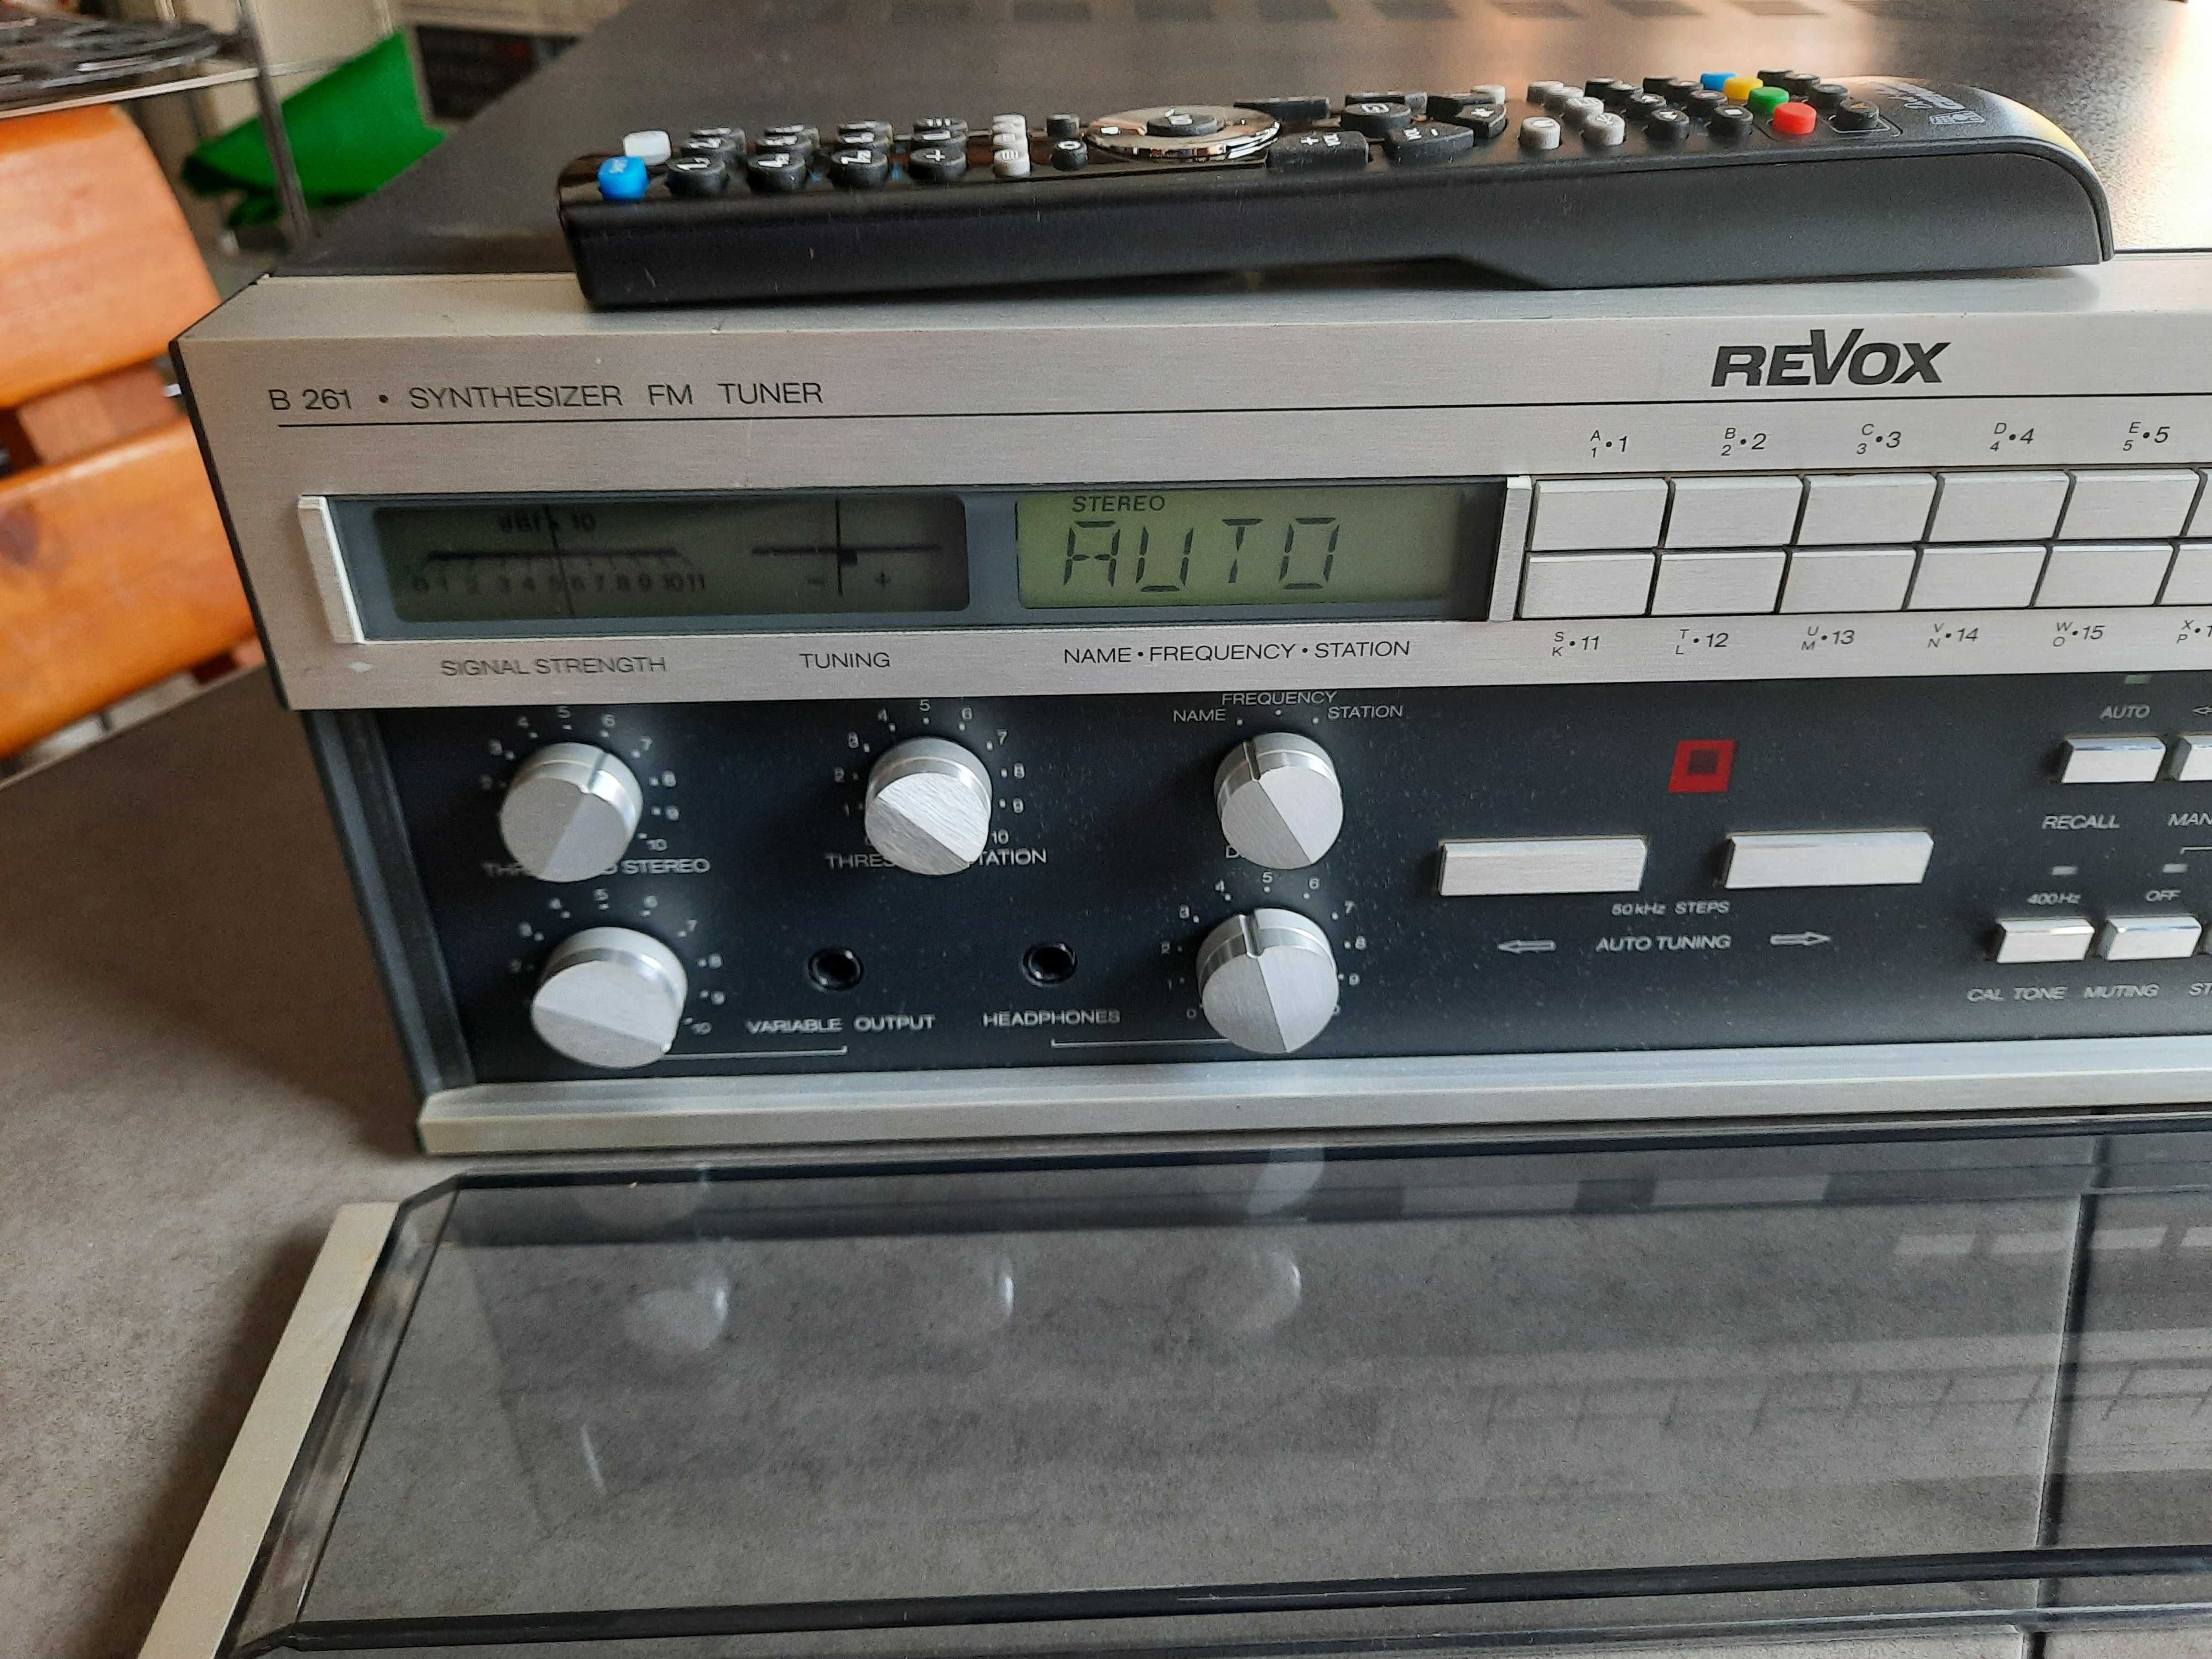 Revox B-261 FM Stereo Tuner